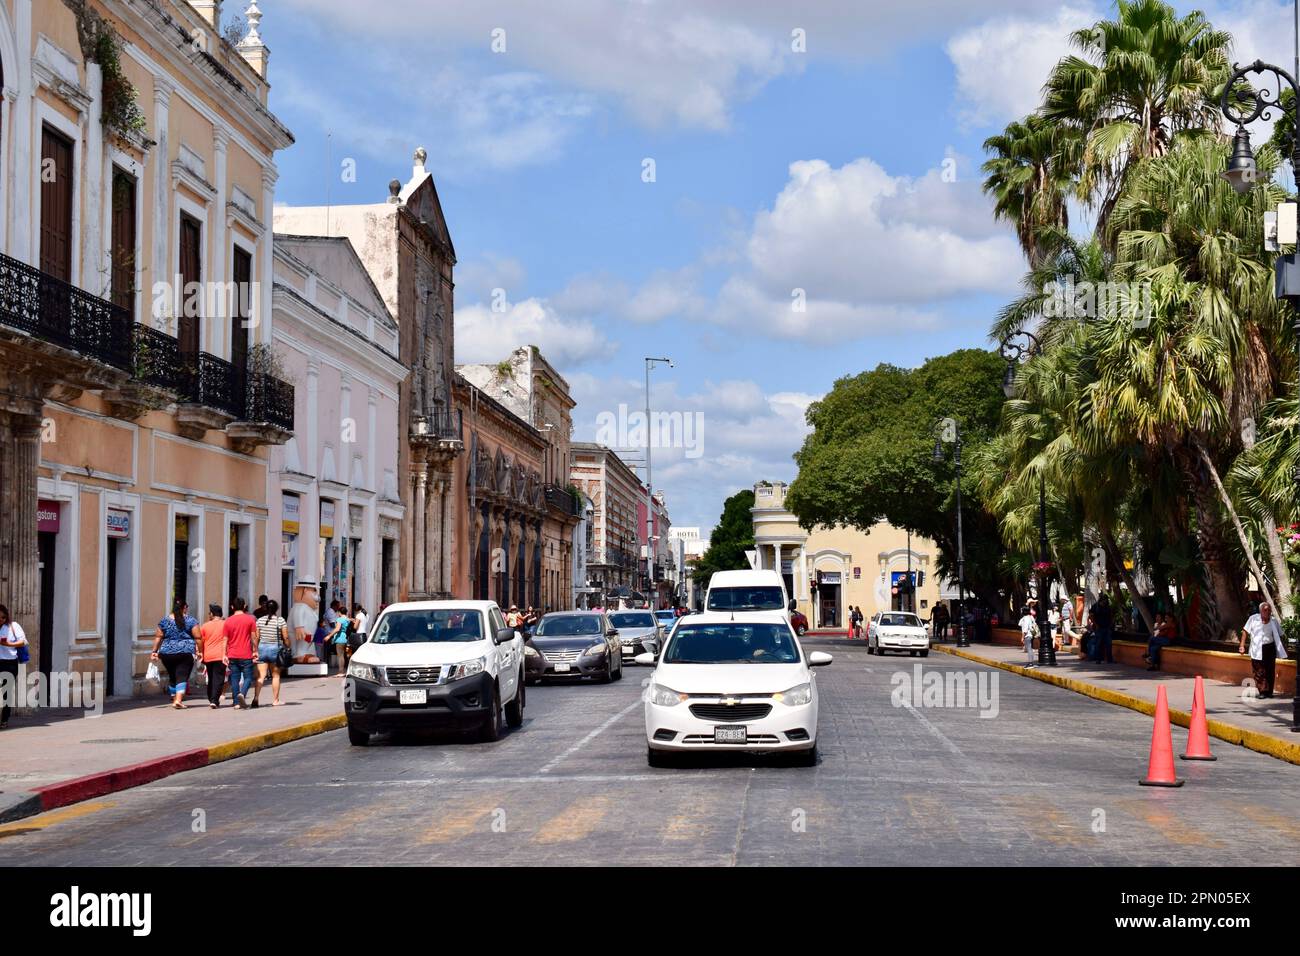 A street in the historic city of Merida, Yucatan, Mexico. Stock Photo